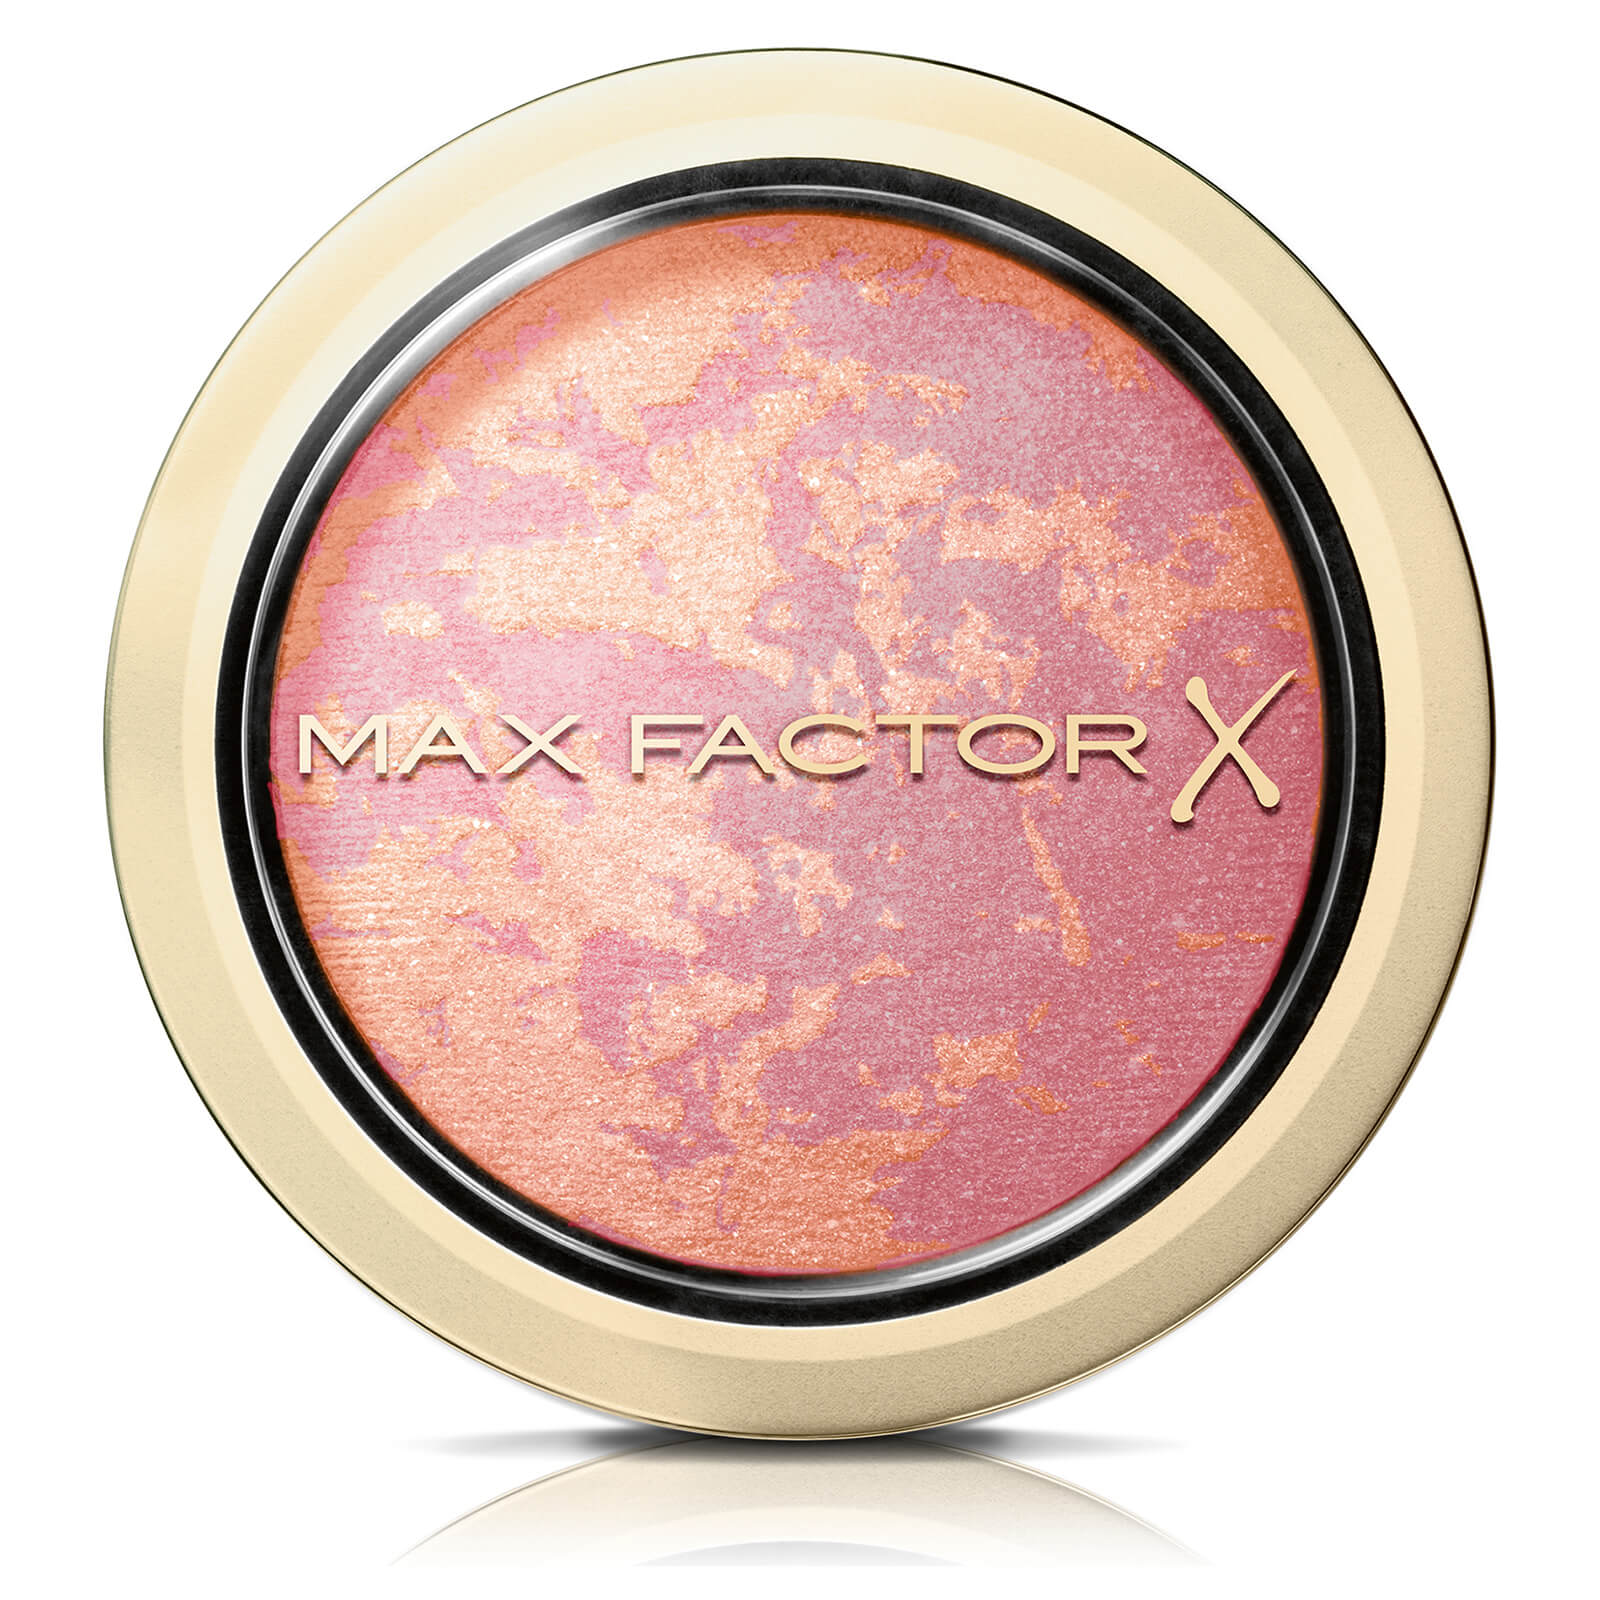 Image of Max Factor Crème Puff blush - Seductive Pink